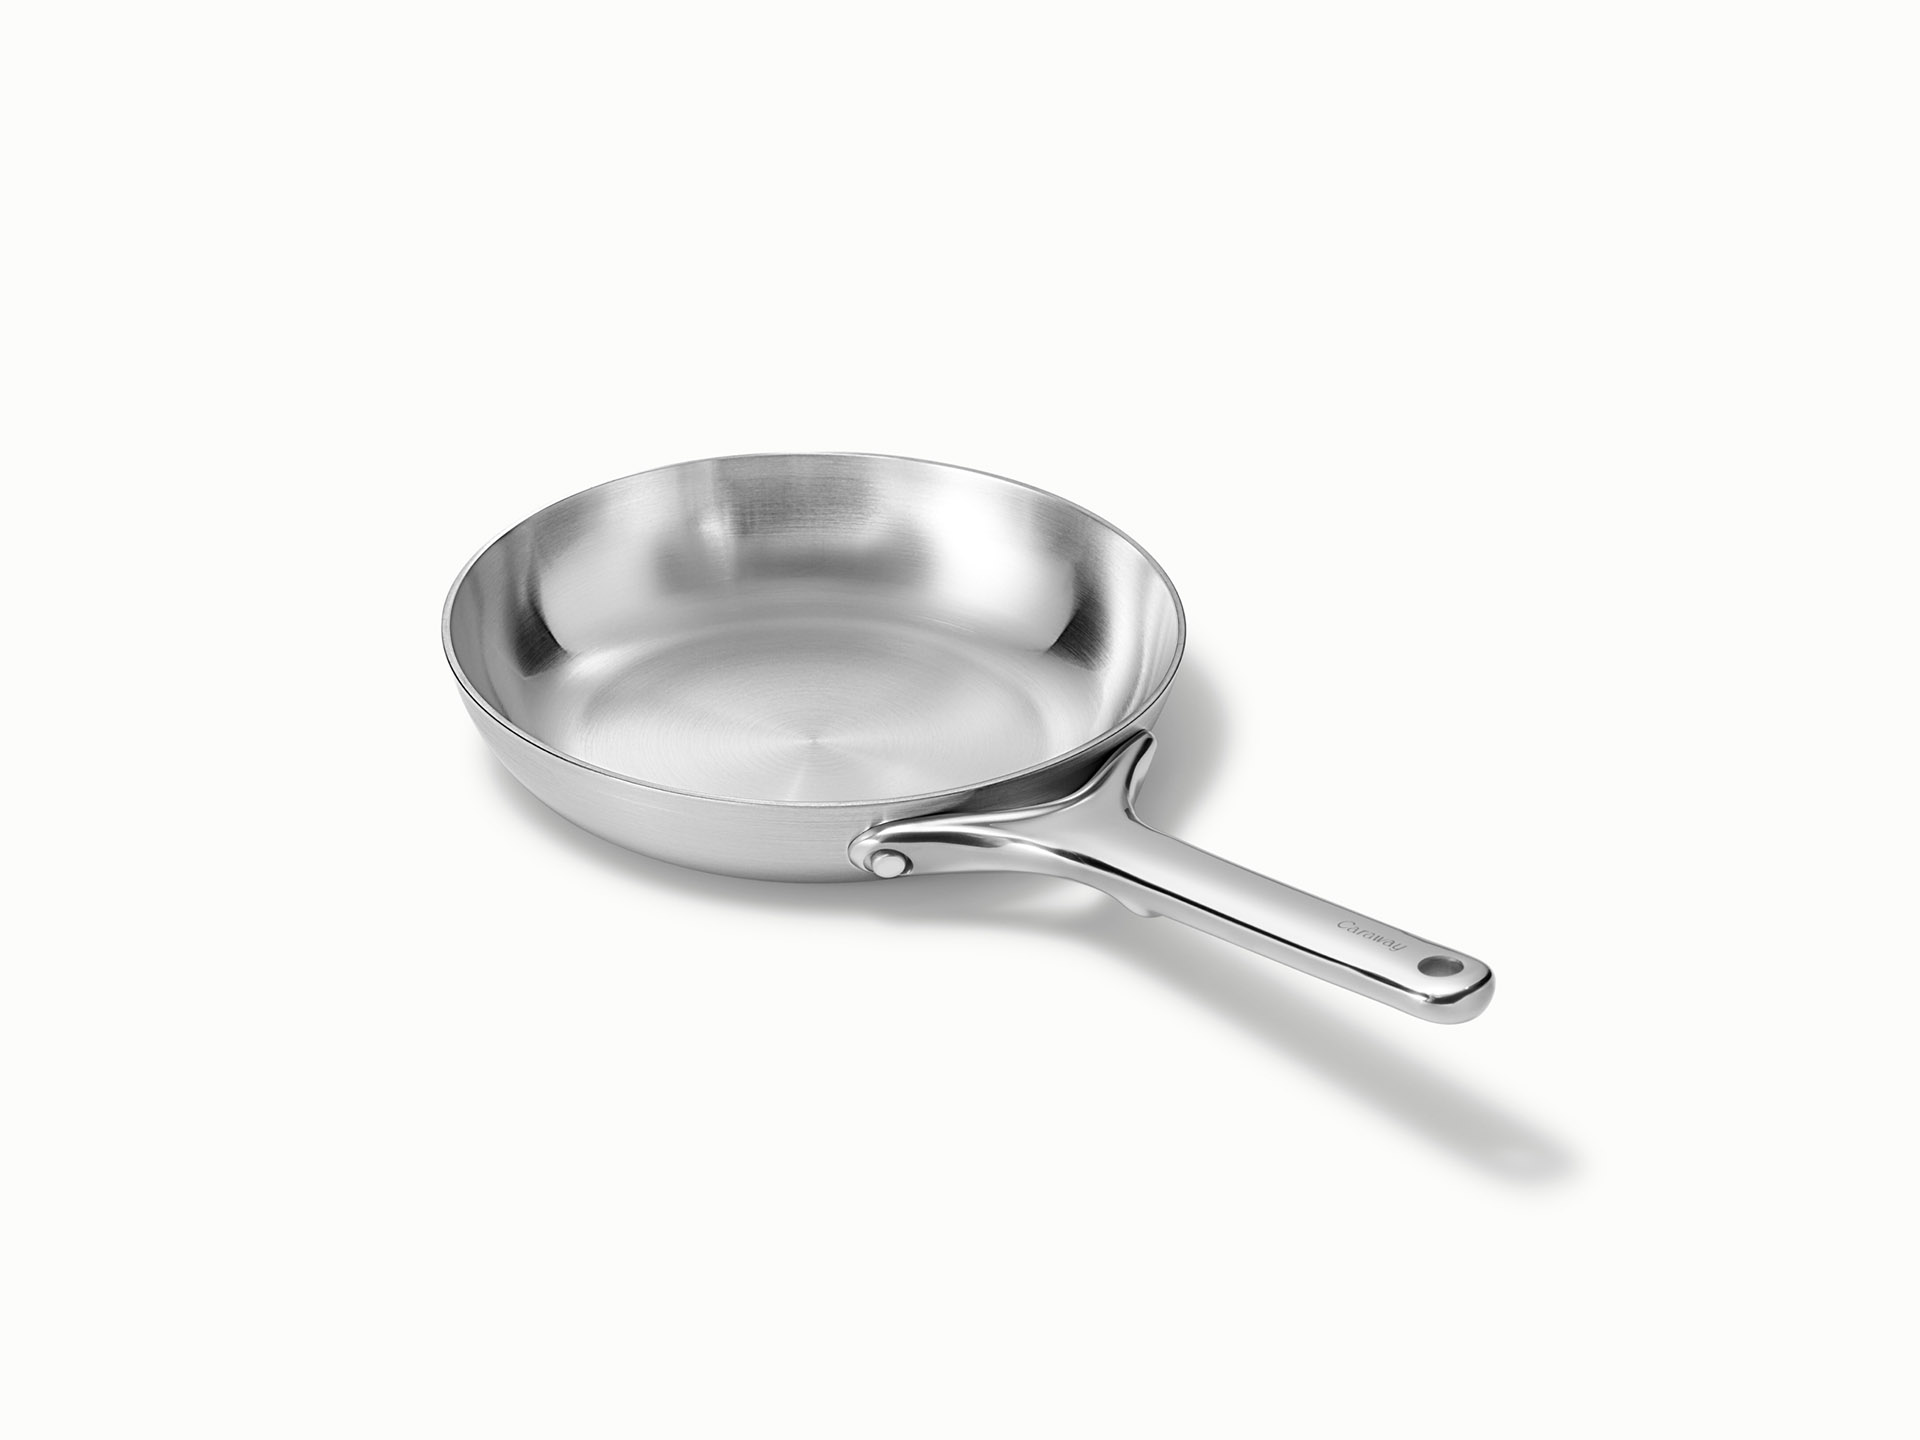 Küchenprofi Capri Stainless Steel Nonstick Mini Fry Pan/Skillet